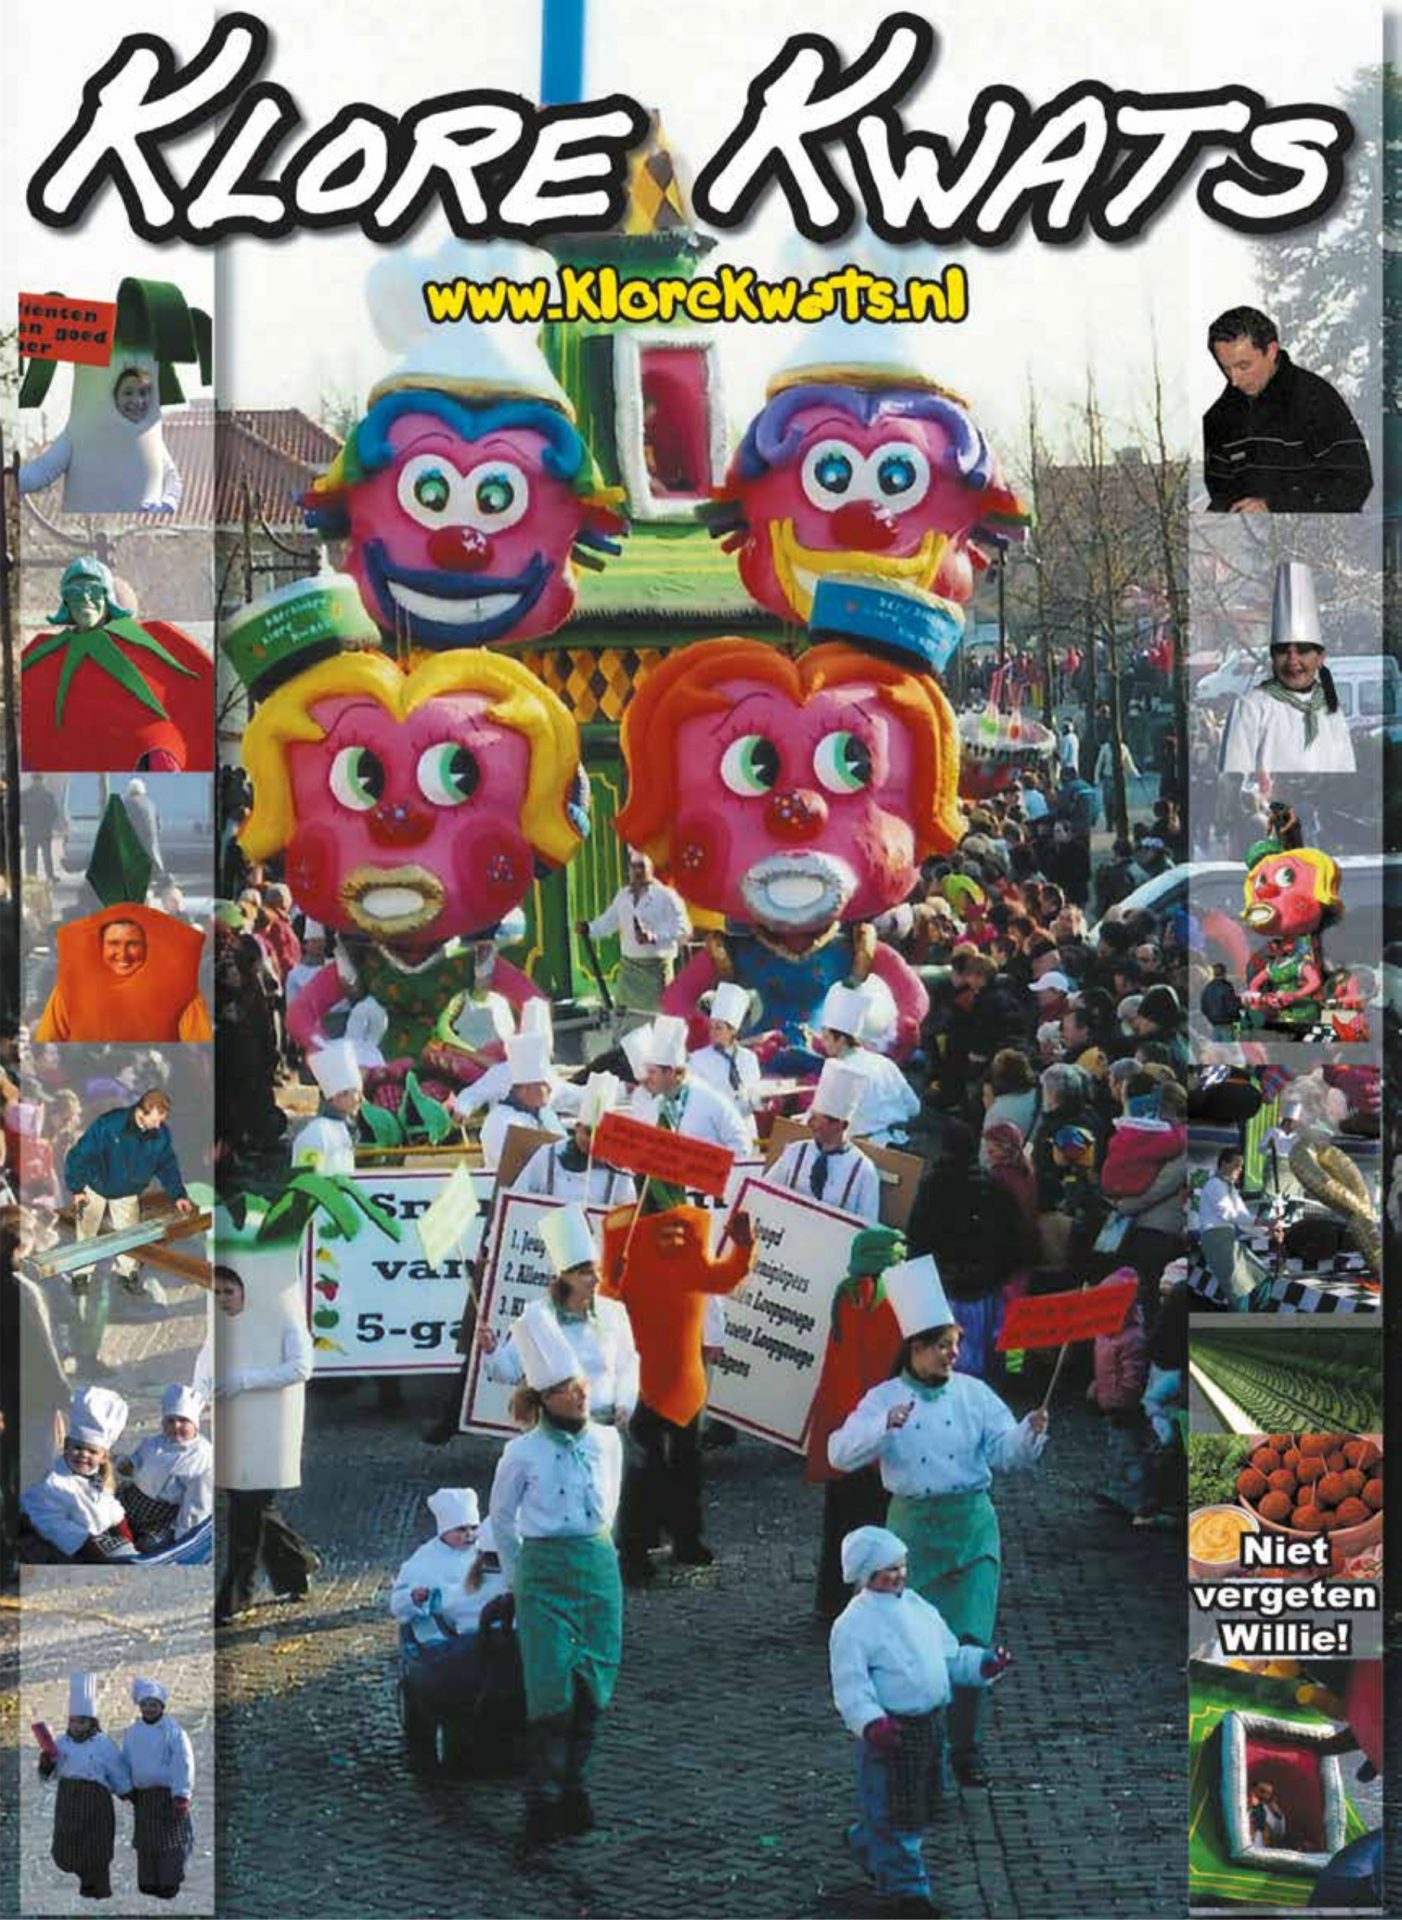 carnavalskrant klorekwats 2006 1